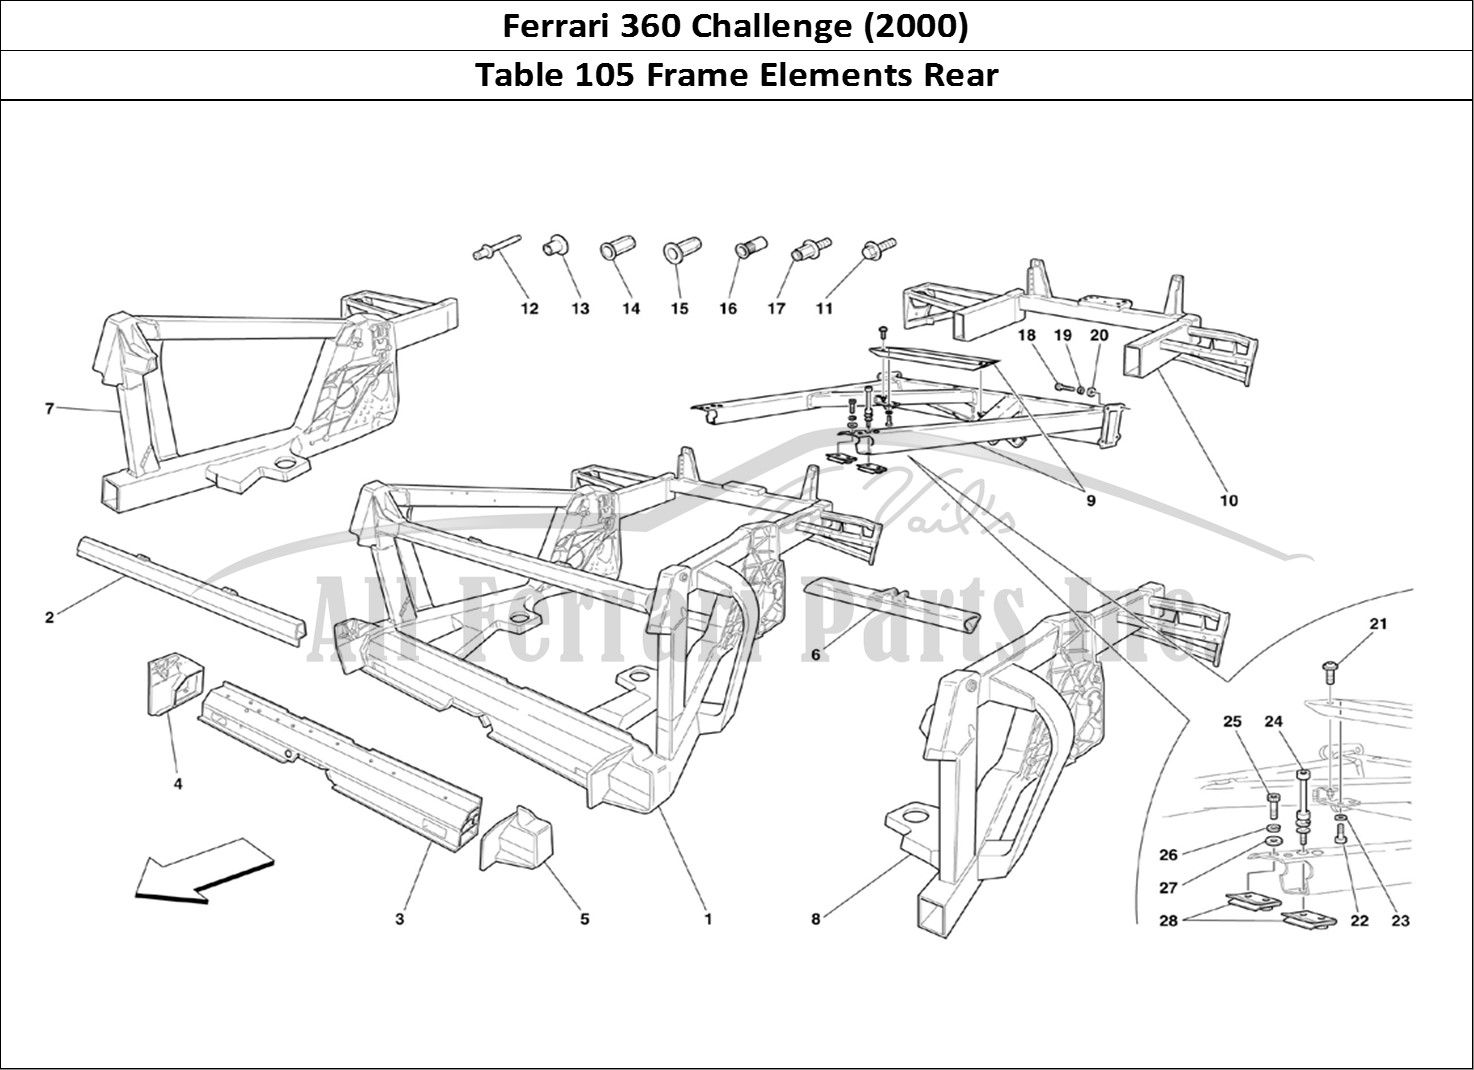 Ferrari Parts Ferrari 360 Challenge (2000) Page 105 Frame - Rear Elements Sub